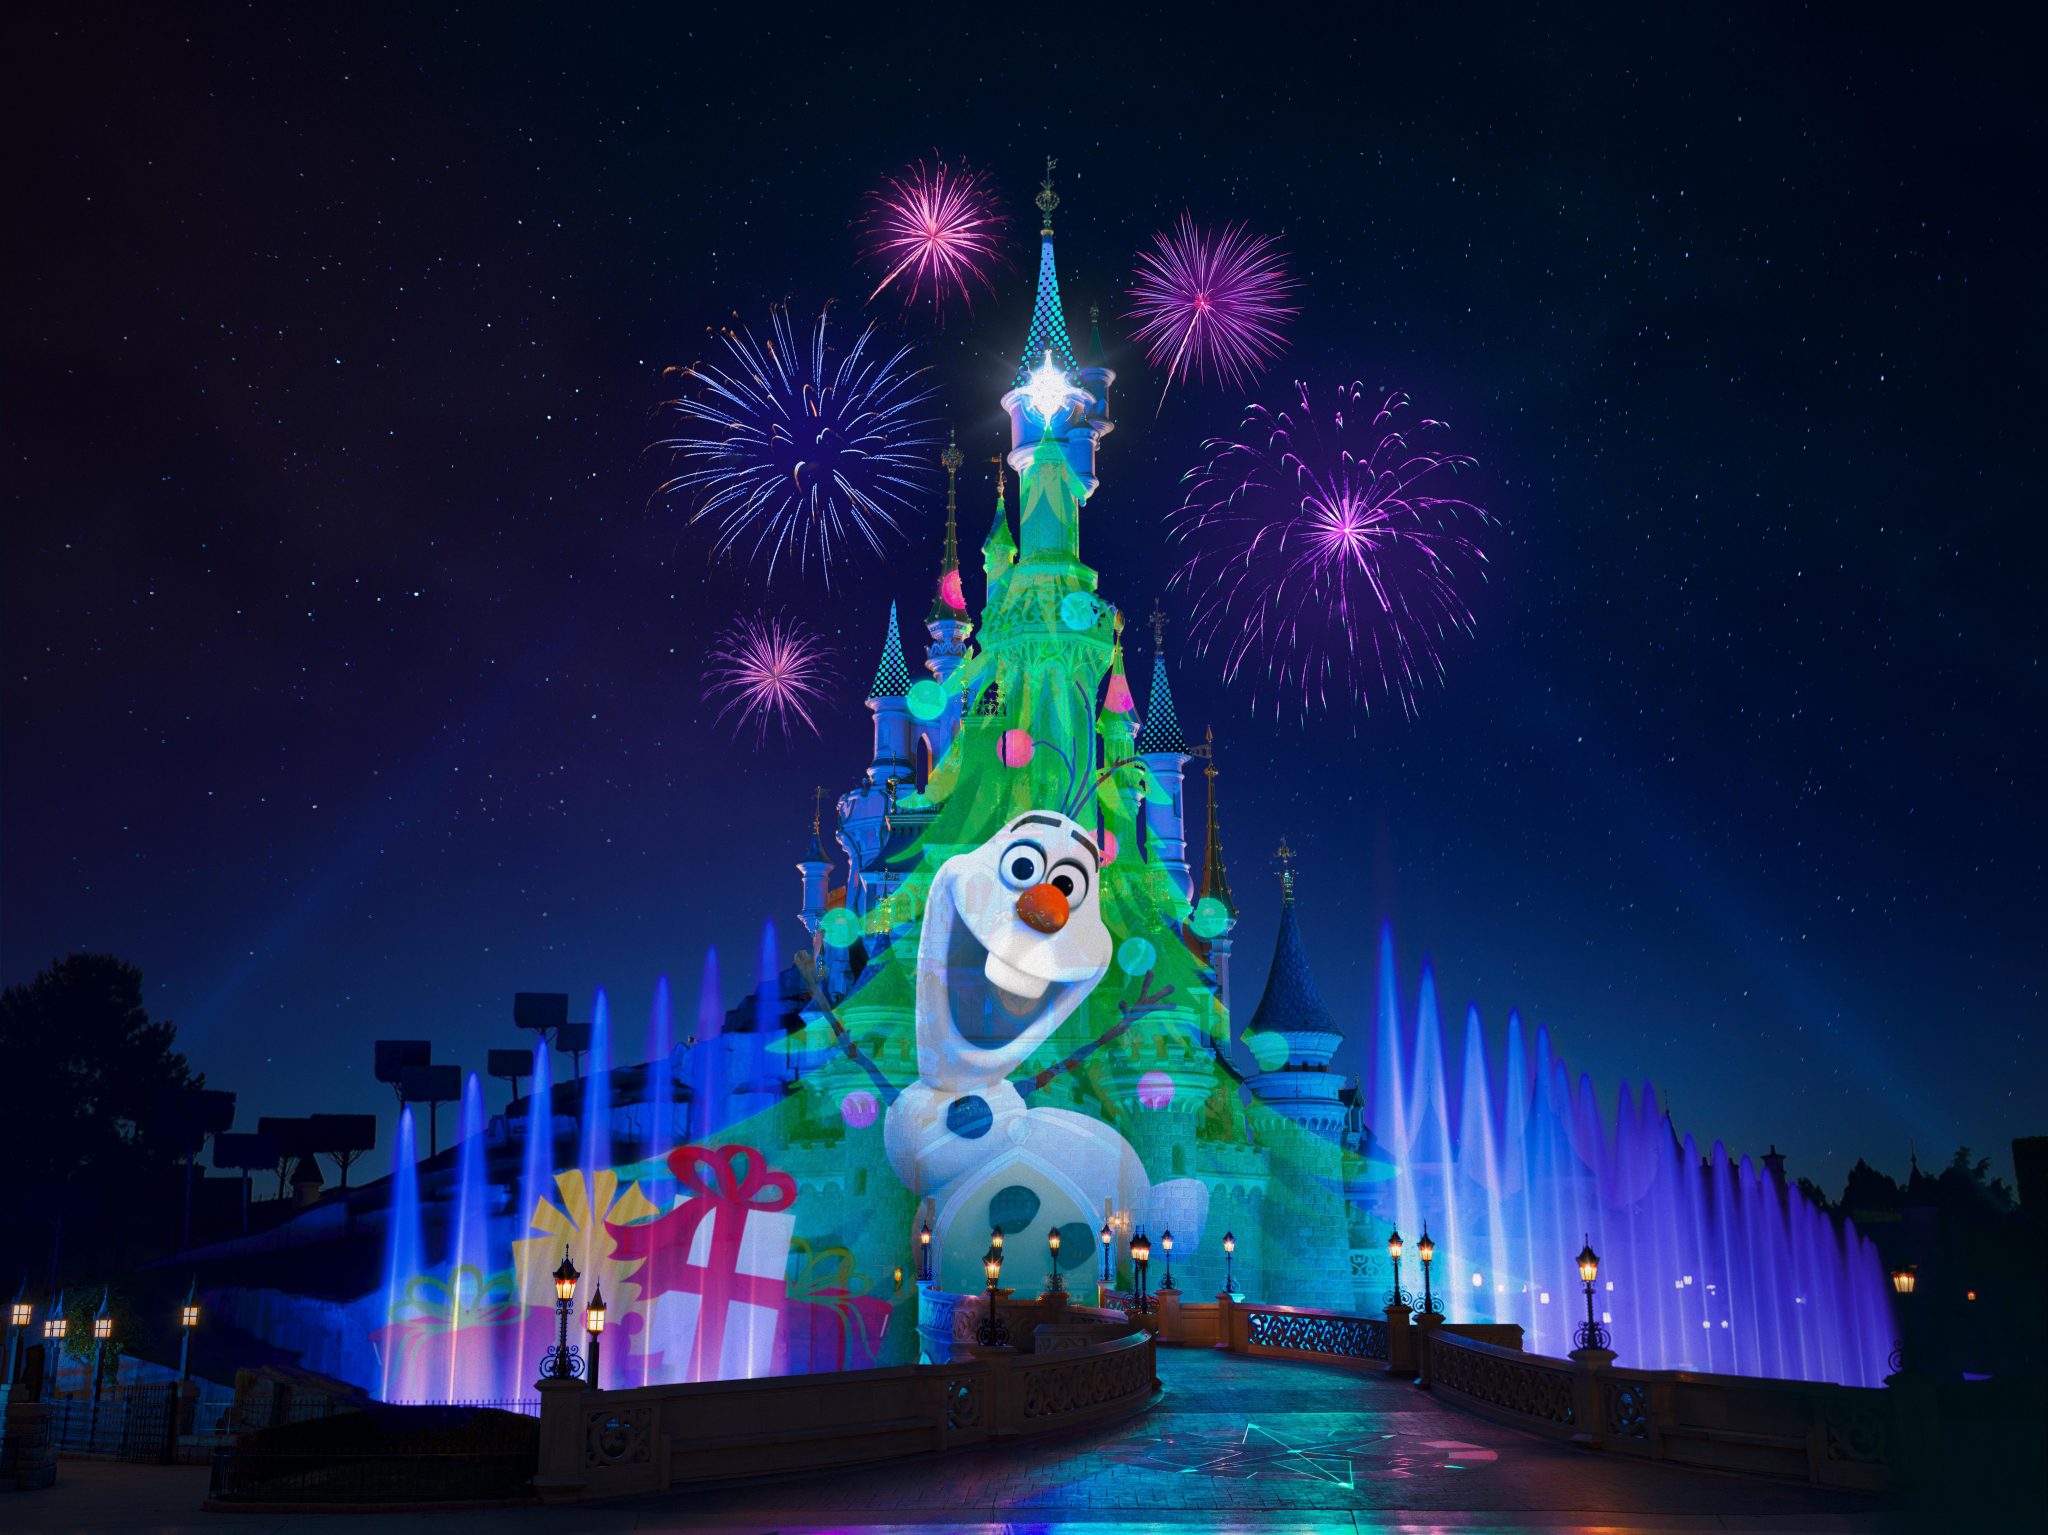 Disney Dreams of Christmas Nighttime Show Returns to Disneyland Paris